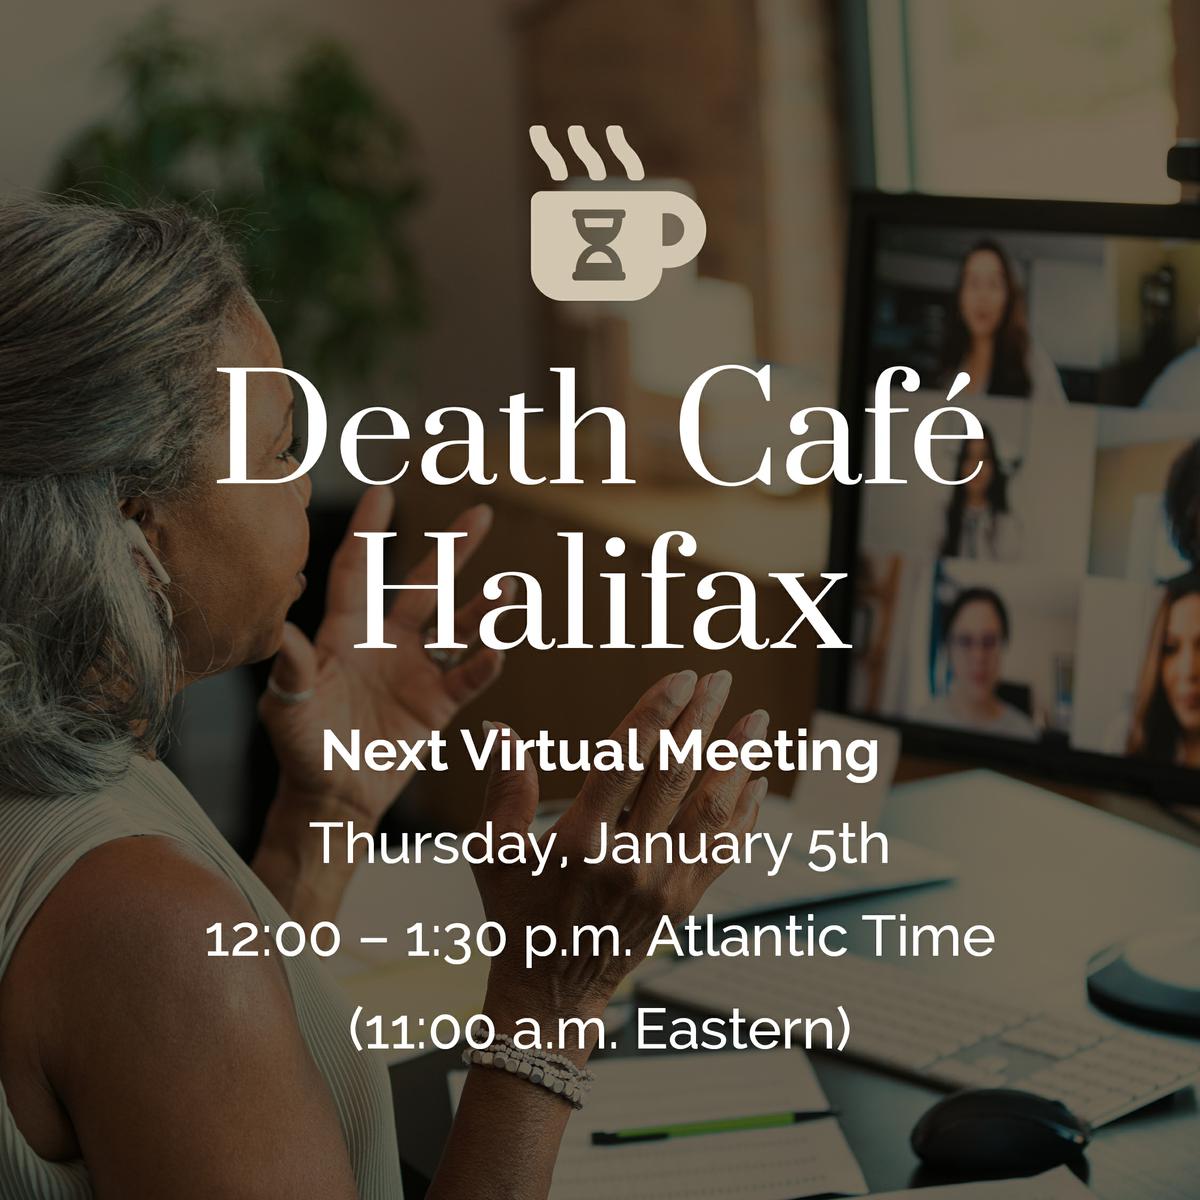 Online Death Cafe Halifax Nova Scotia AST